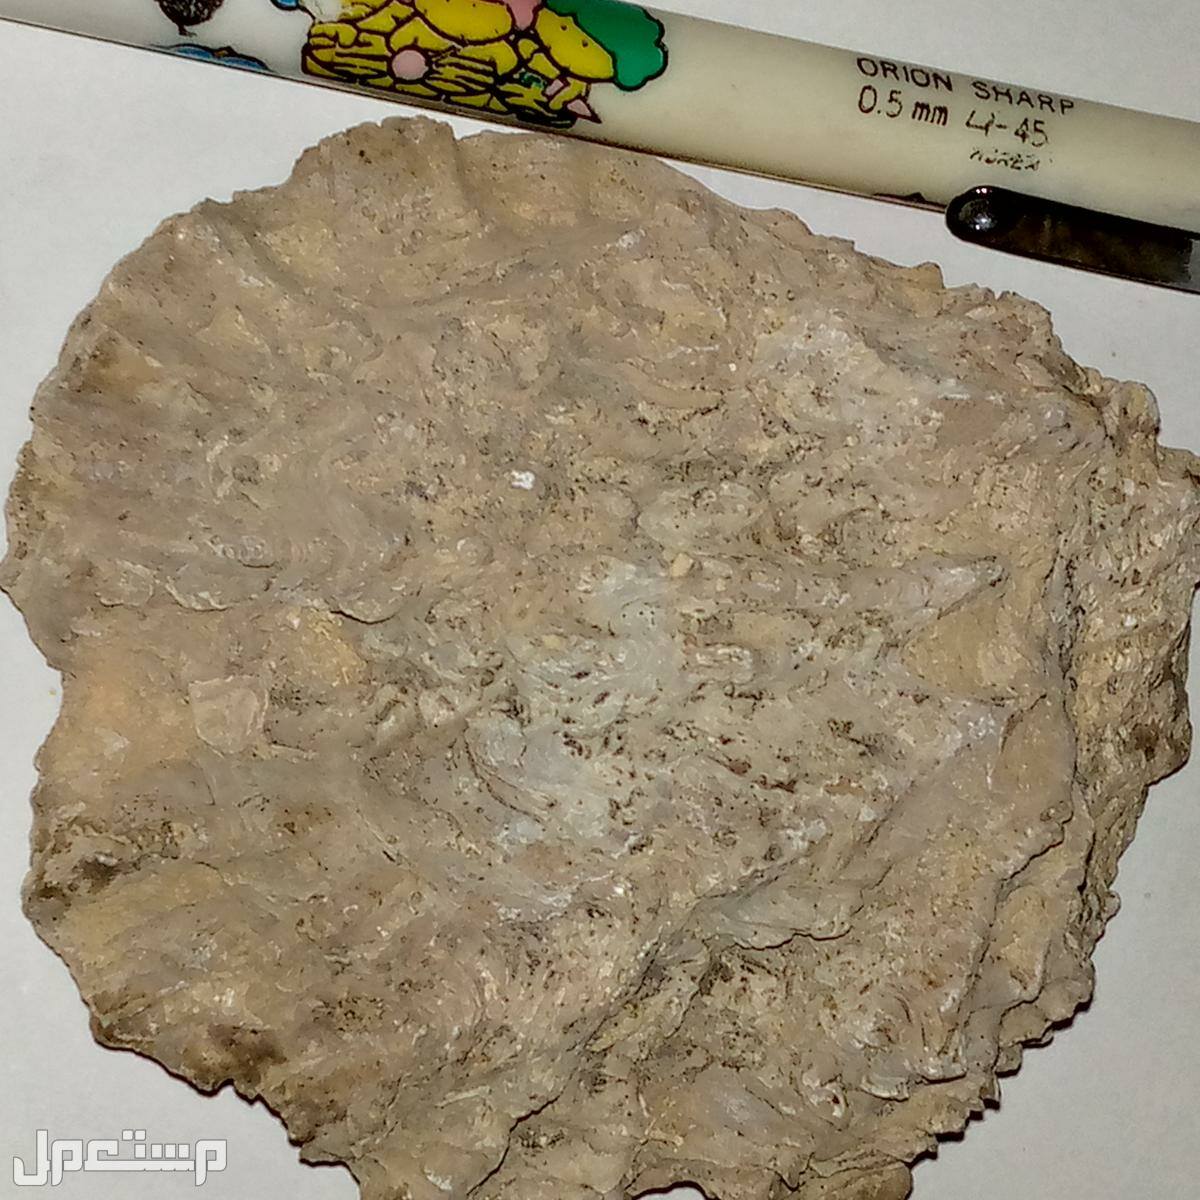 fossile صدفة متحجرة من العصرالكامبرى المبكر قبل اكثر من500مليون سنة،فرصة لن تكرر،انظرالصور